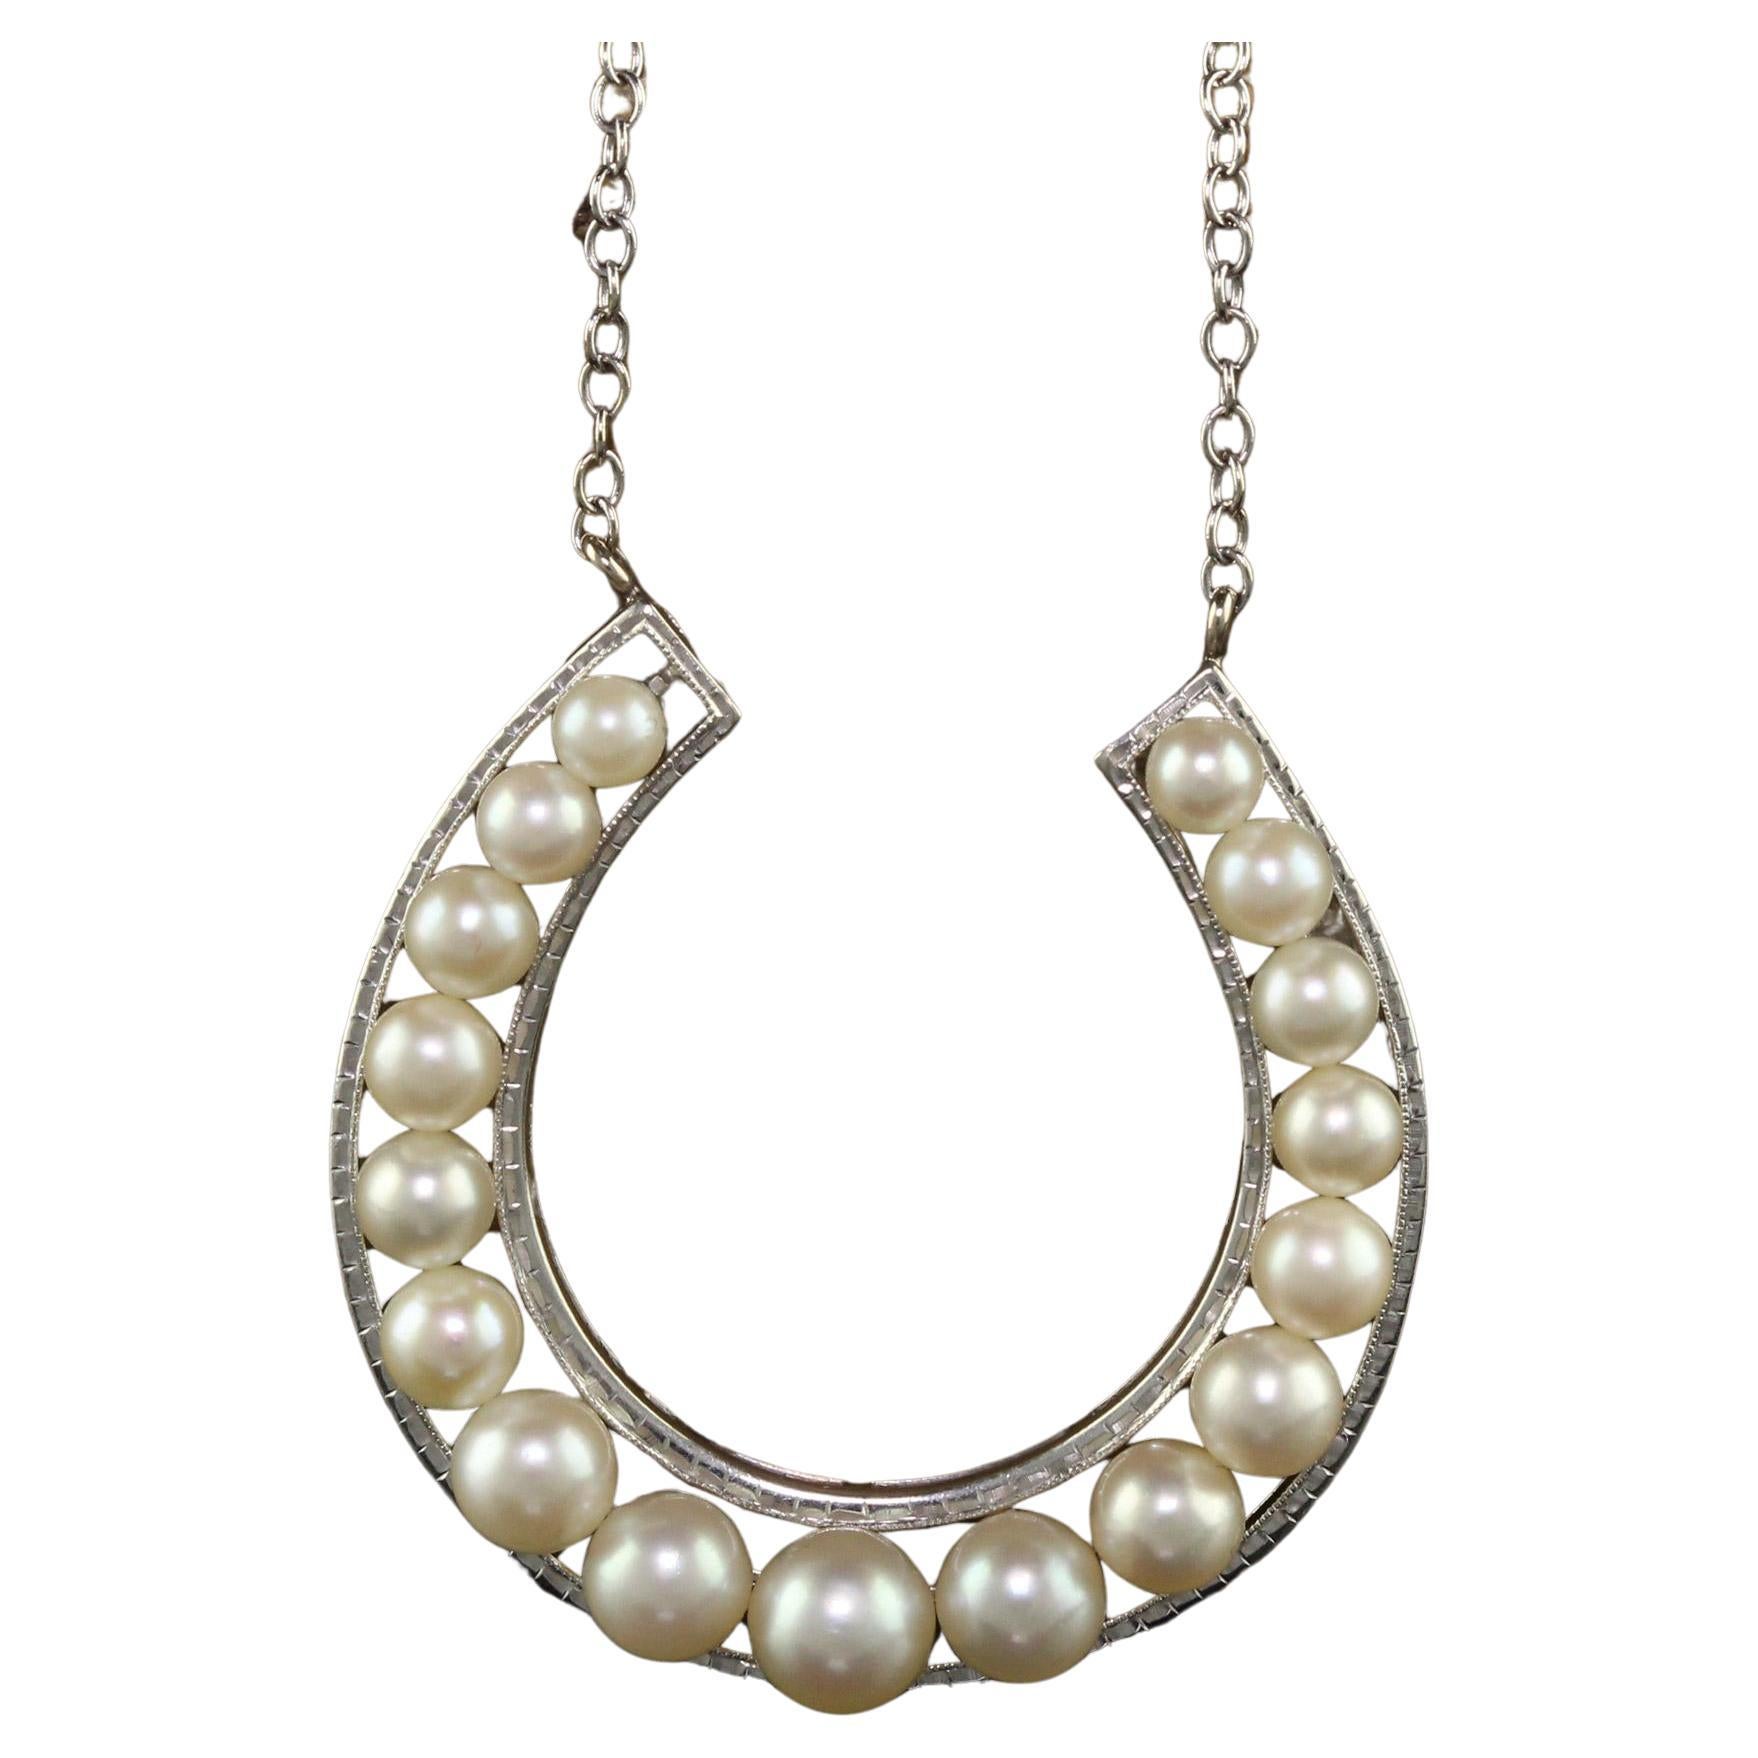 Mikimoto Akoya, collier pendentif fer à cheval vintage en or blanc 18 carats avec perles en vente